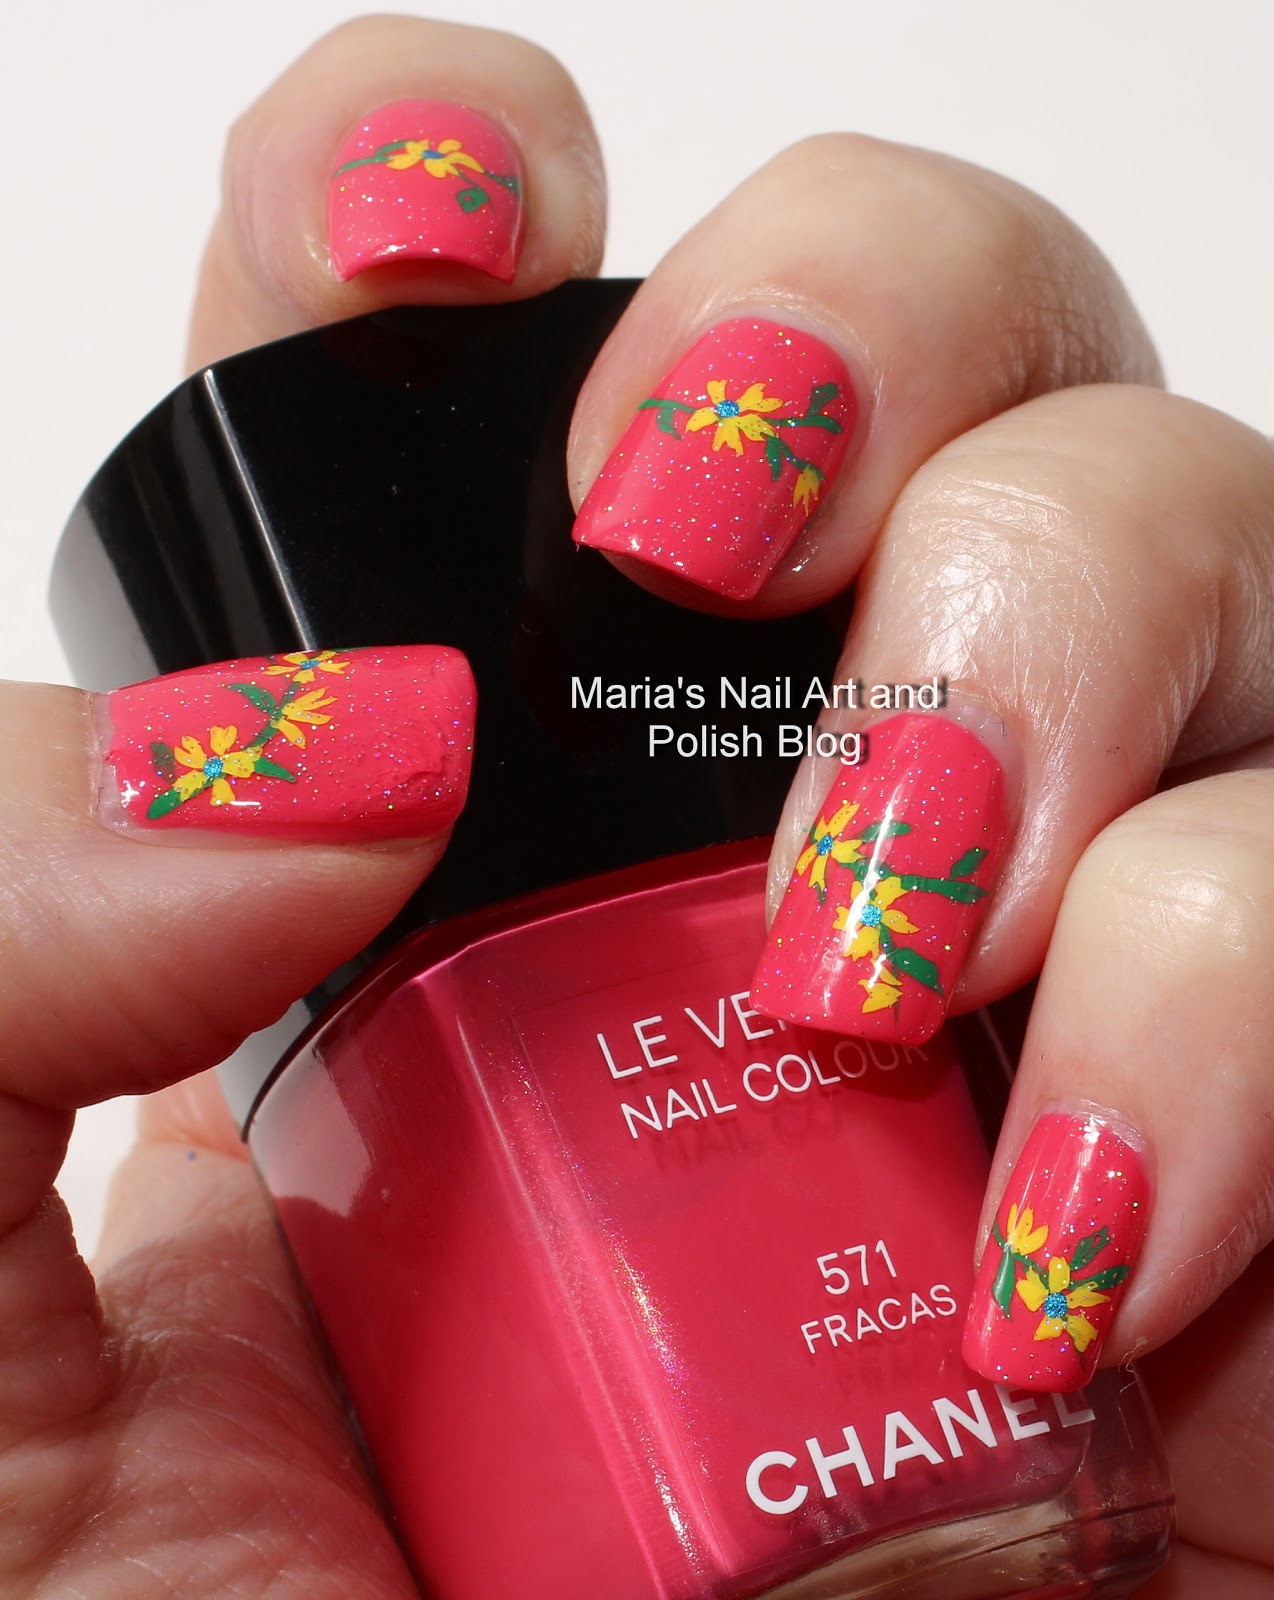 Marias Nail Art and Polish Blog: Fracas flowers